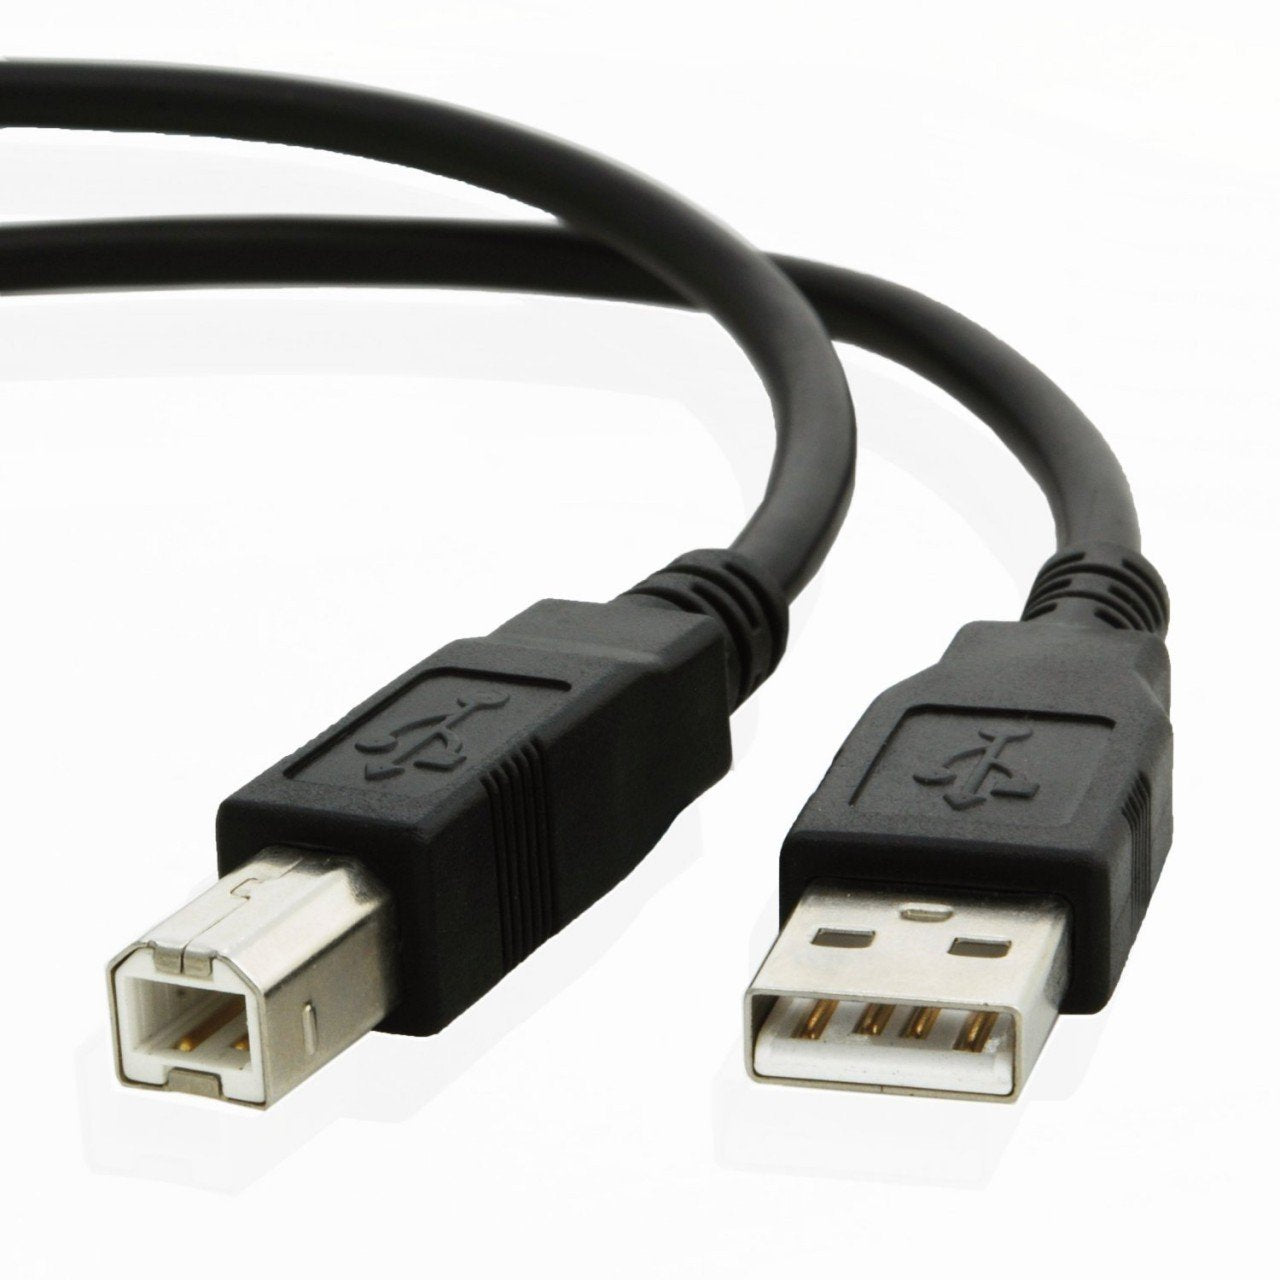 USB cable for Canon PIXMA PRO-10